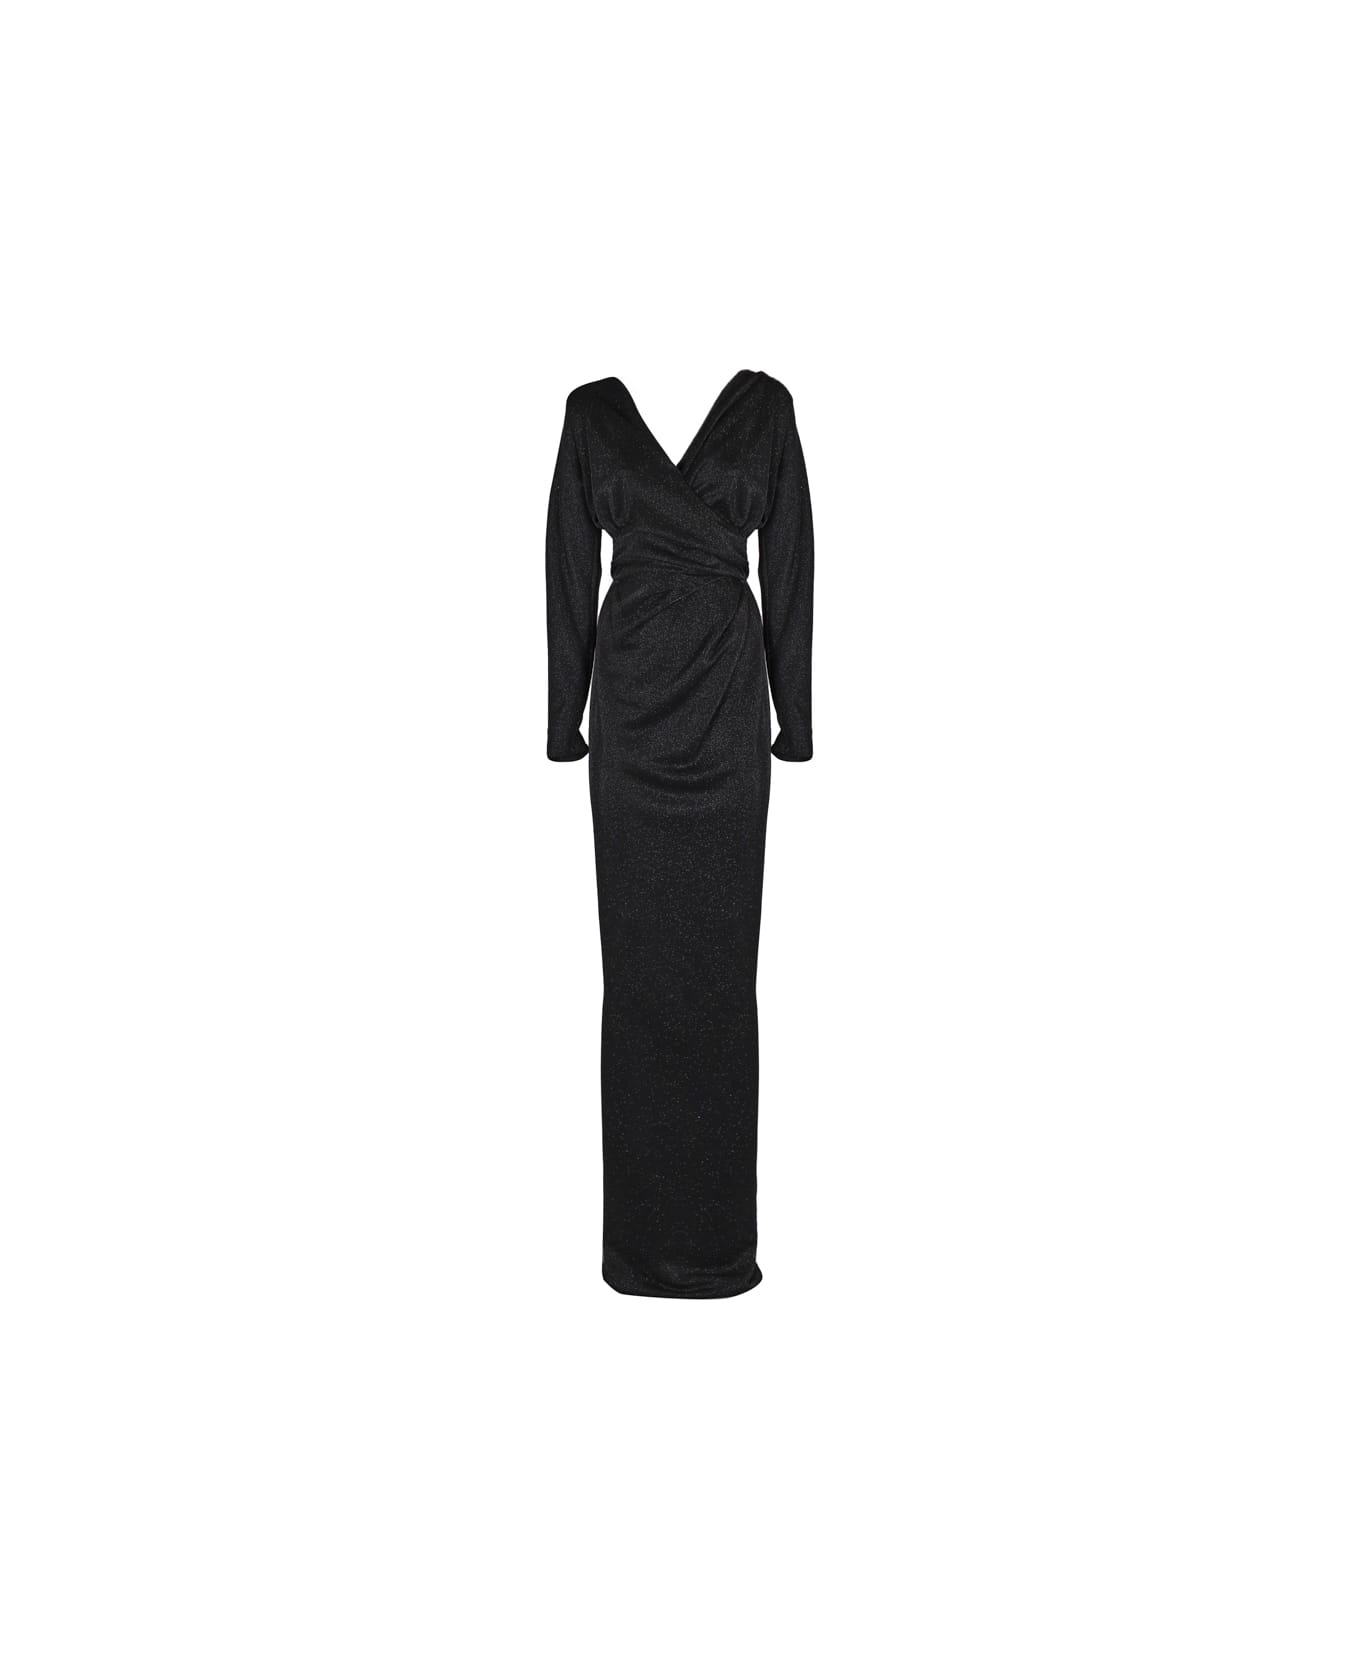 Rhea Costa Glitter Long Sleeve Dress - Black